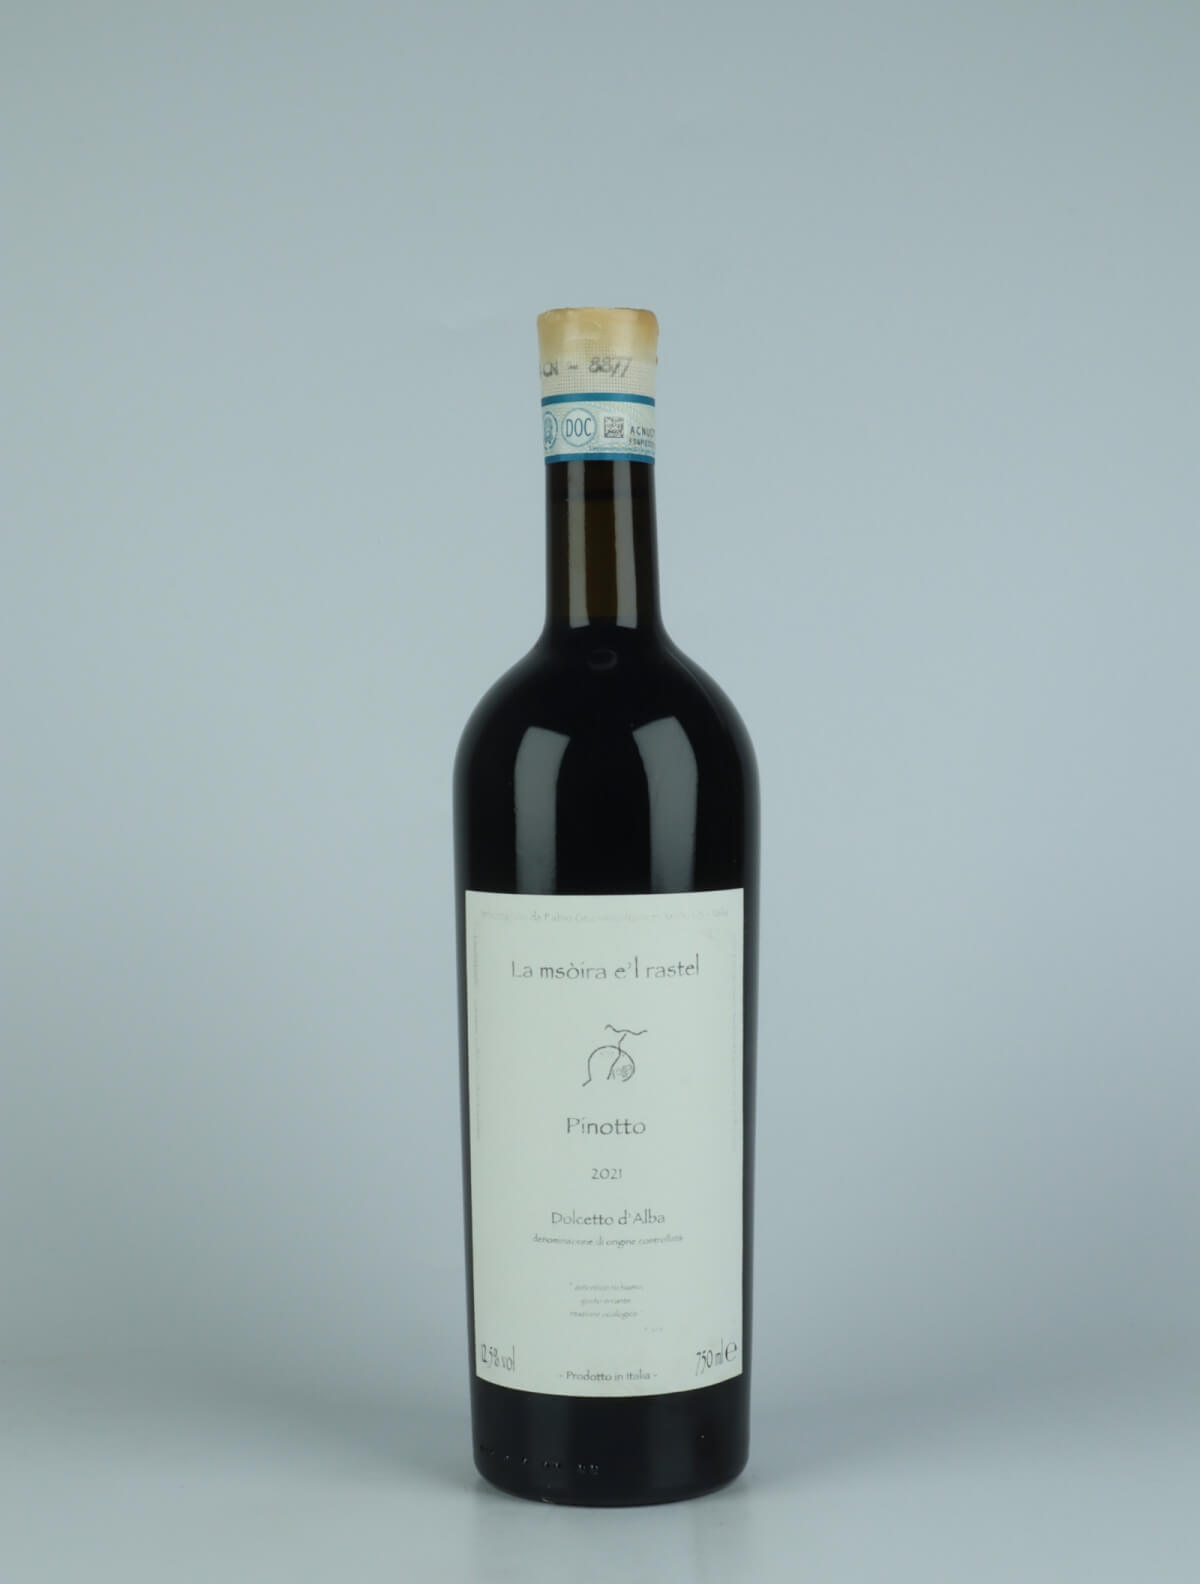 En flaske 2021 Pinotto - Dolcetto d'Alba Rødvin fra Fabio Gea, Piemonte i Italien